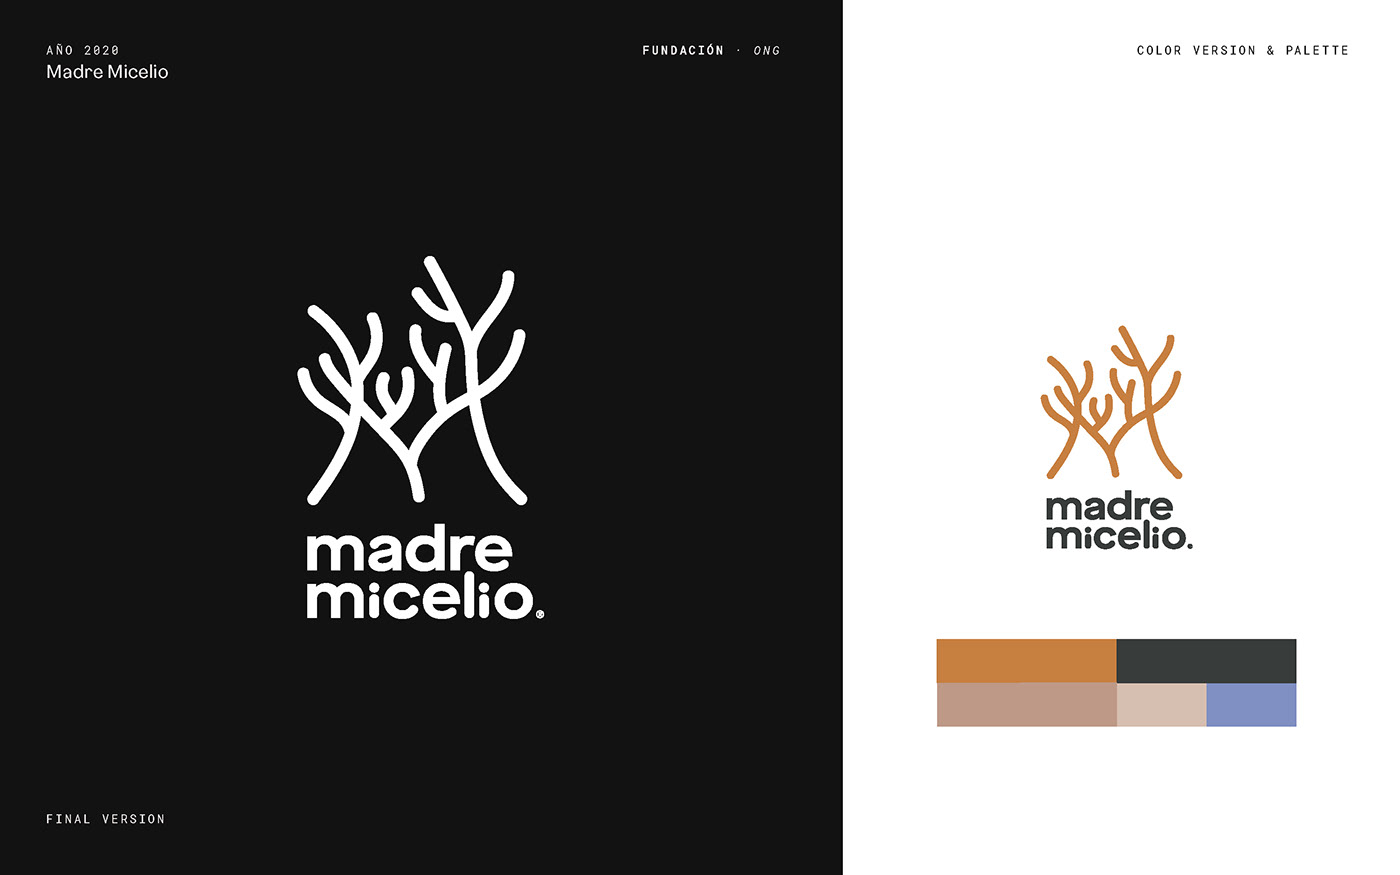 amor brand branding  estudio graphic desing logo logofolio marks portfolio